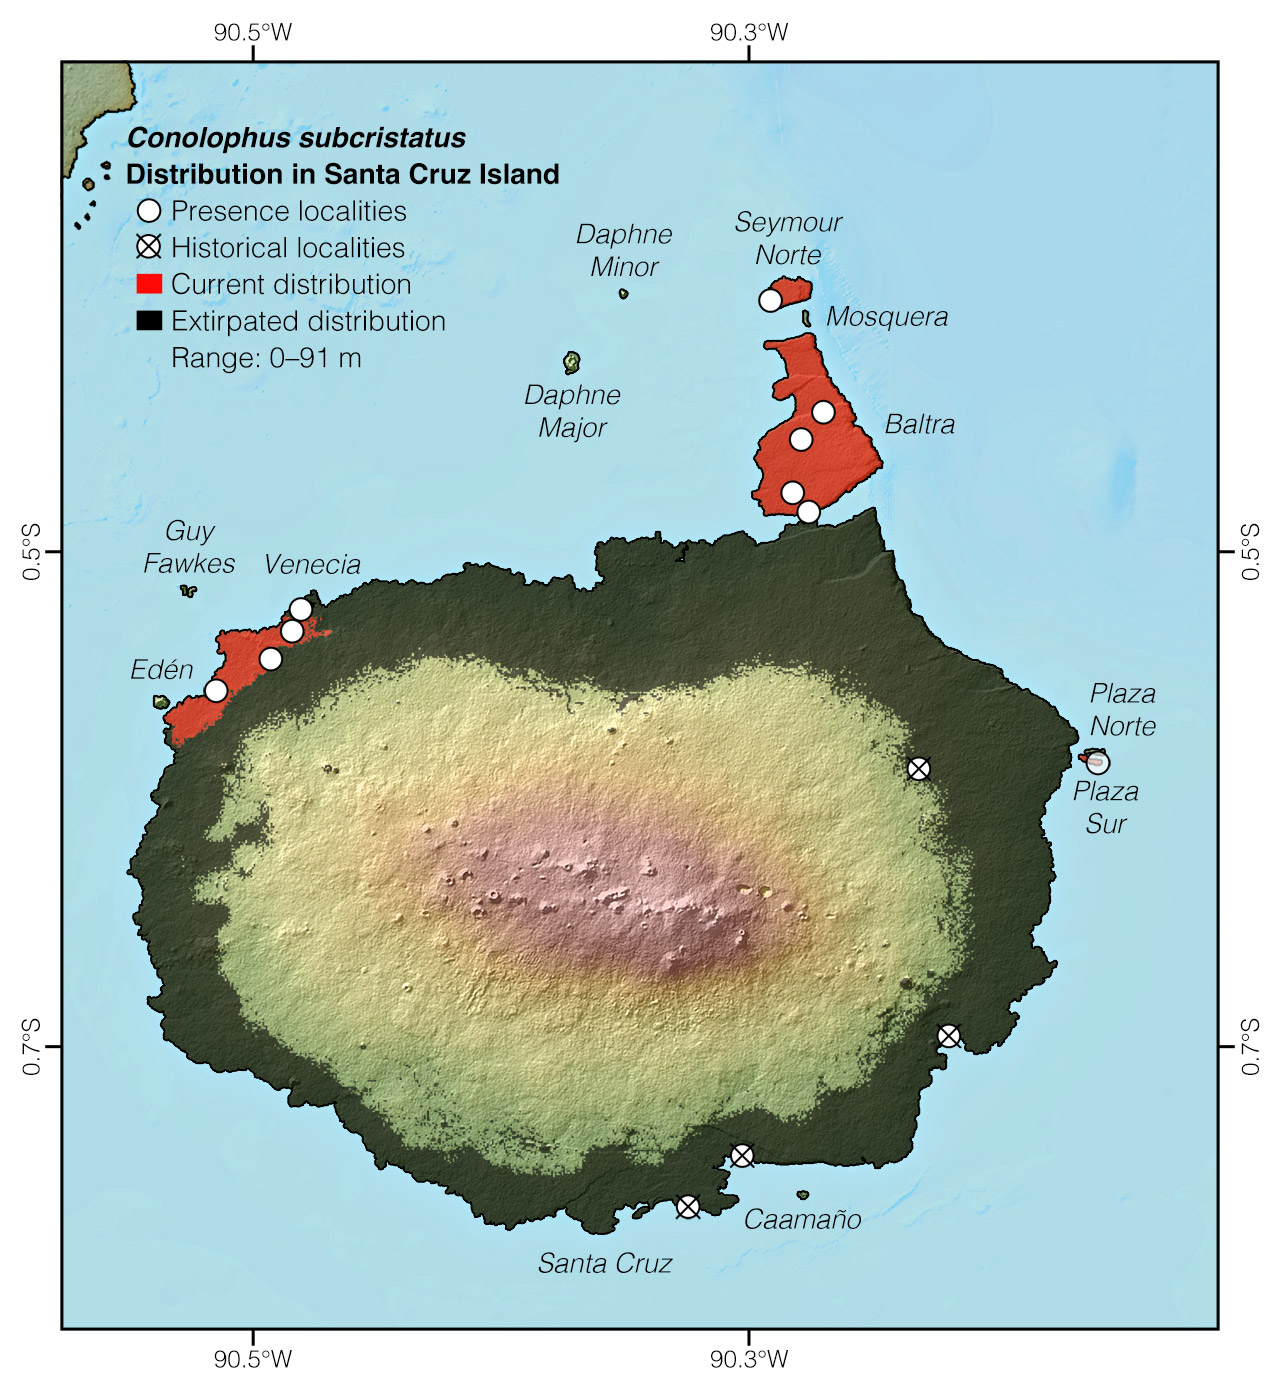 Distribution of Conolophus subcristatus in Santa Cruz Island